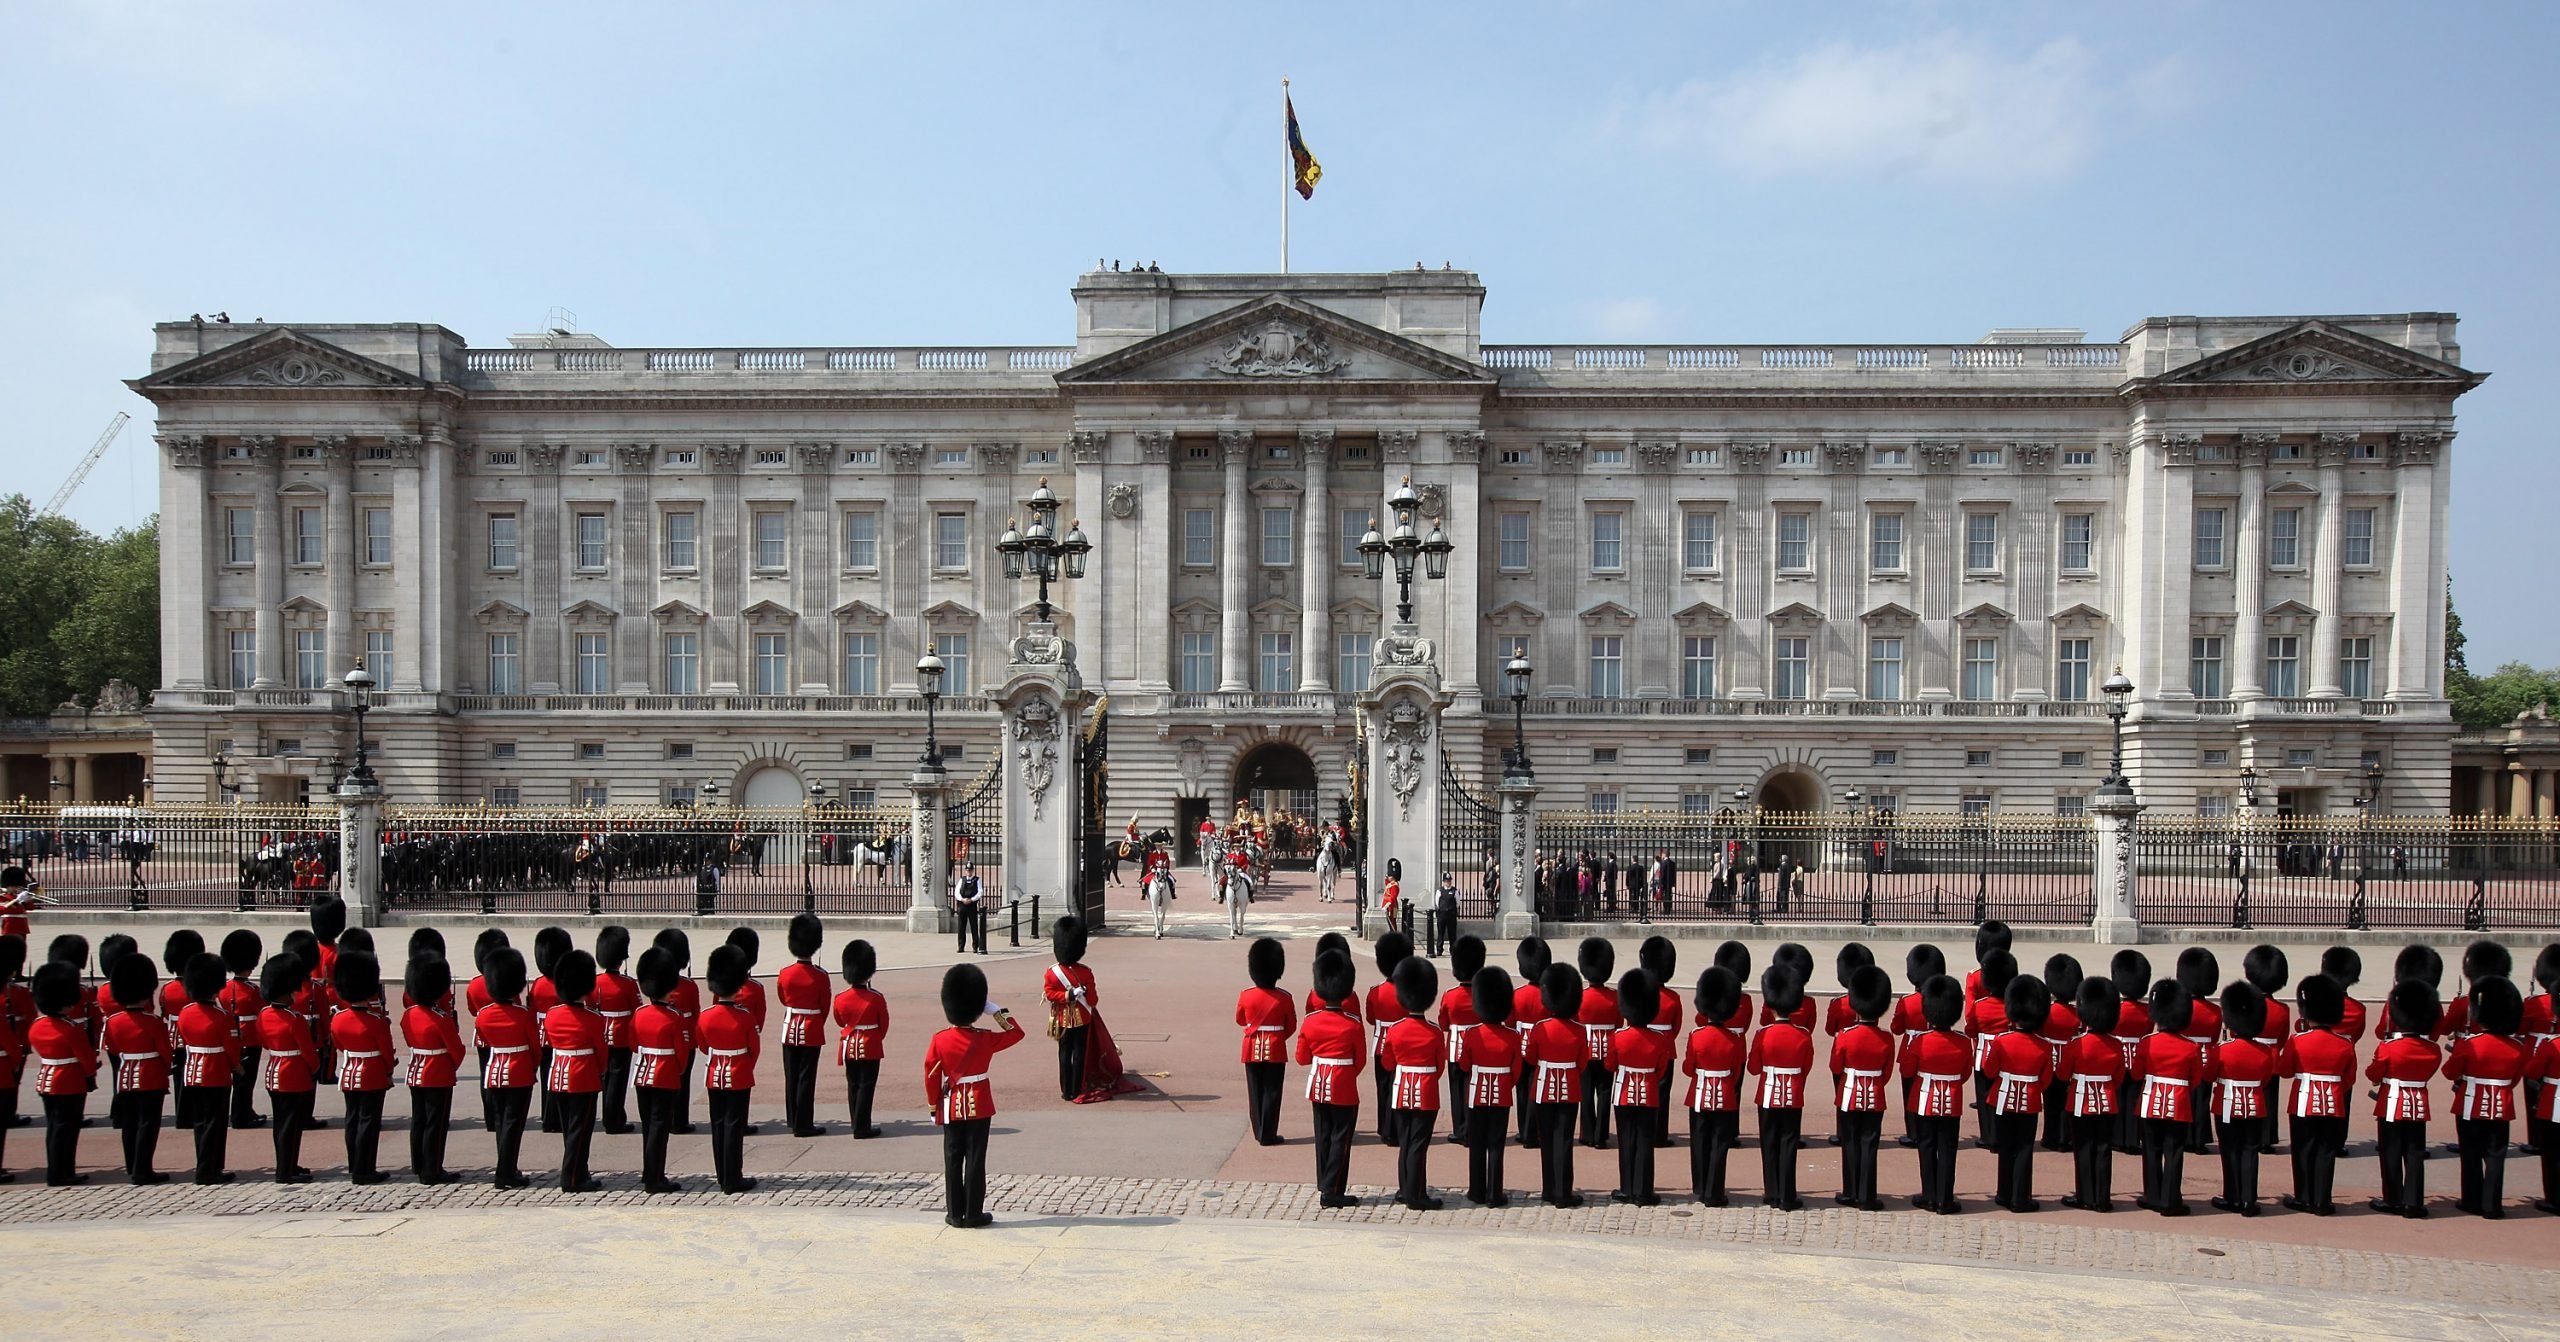 Photo of Buckingham Palace; Queen Elizabeth II's London residence